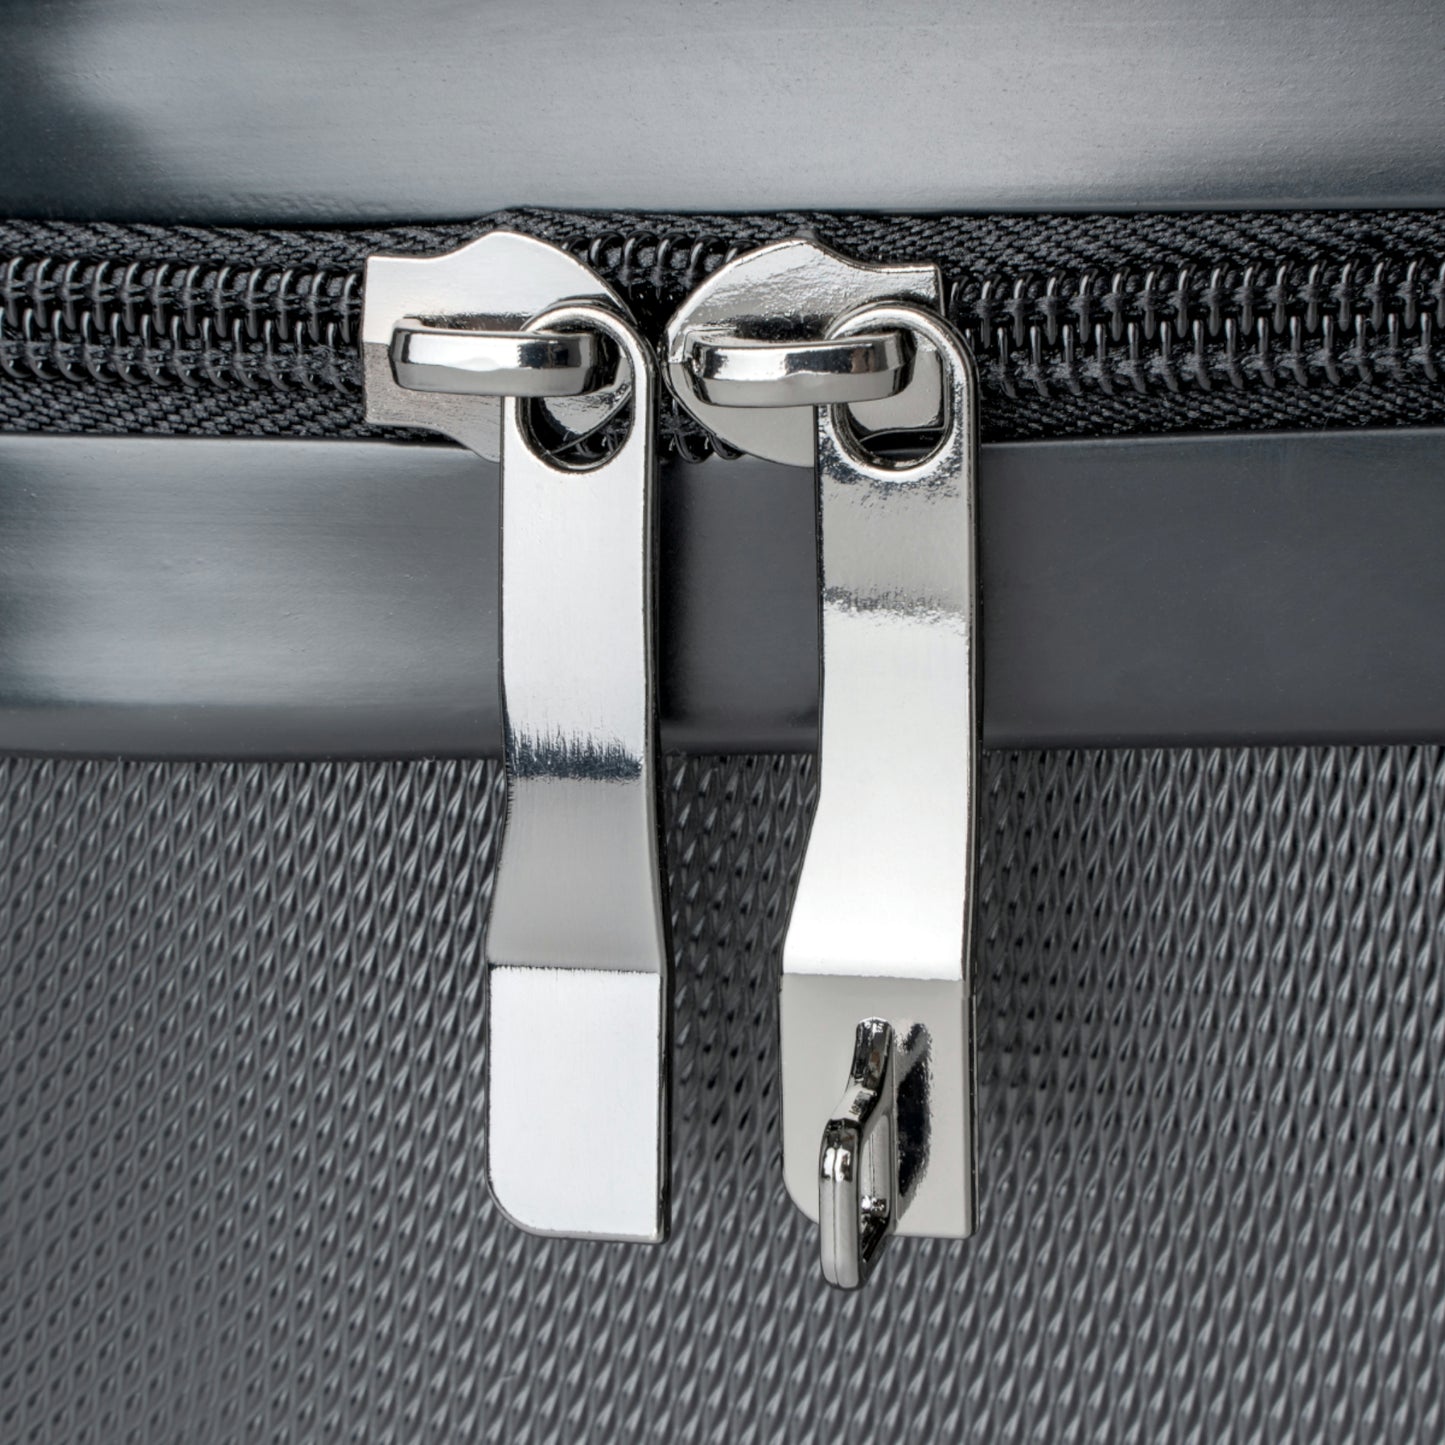 Women's Monogram Suitcase / Personalized Luggage